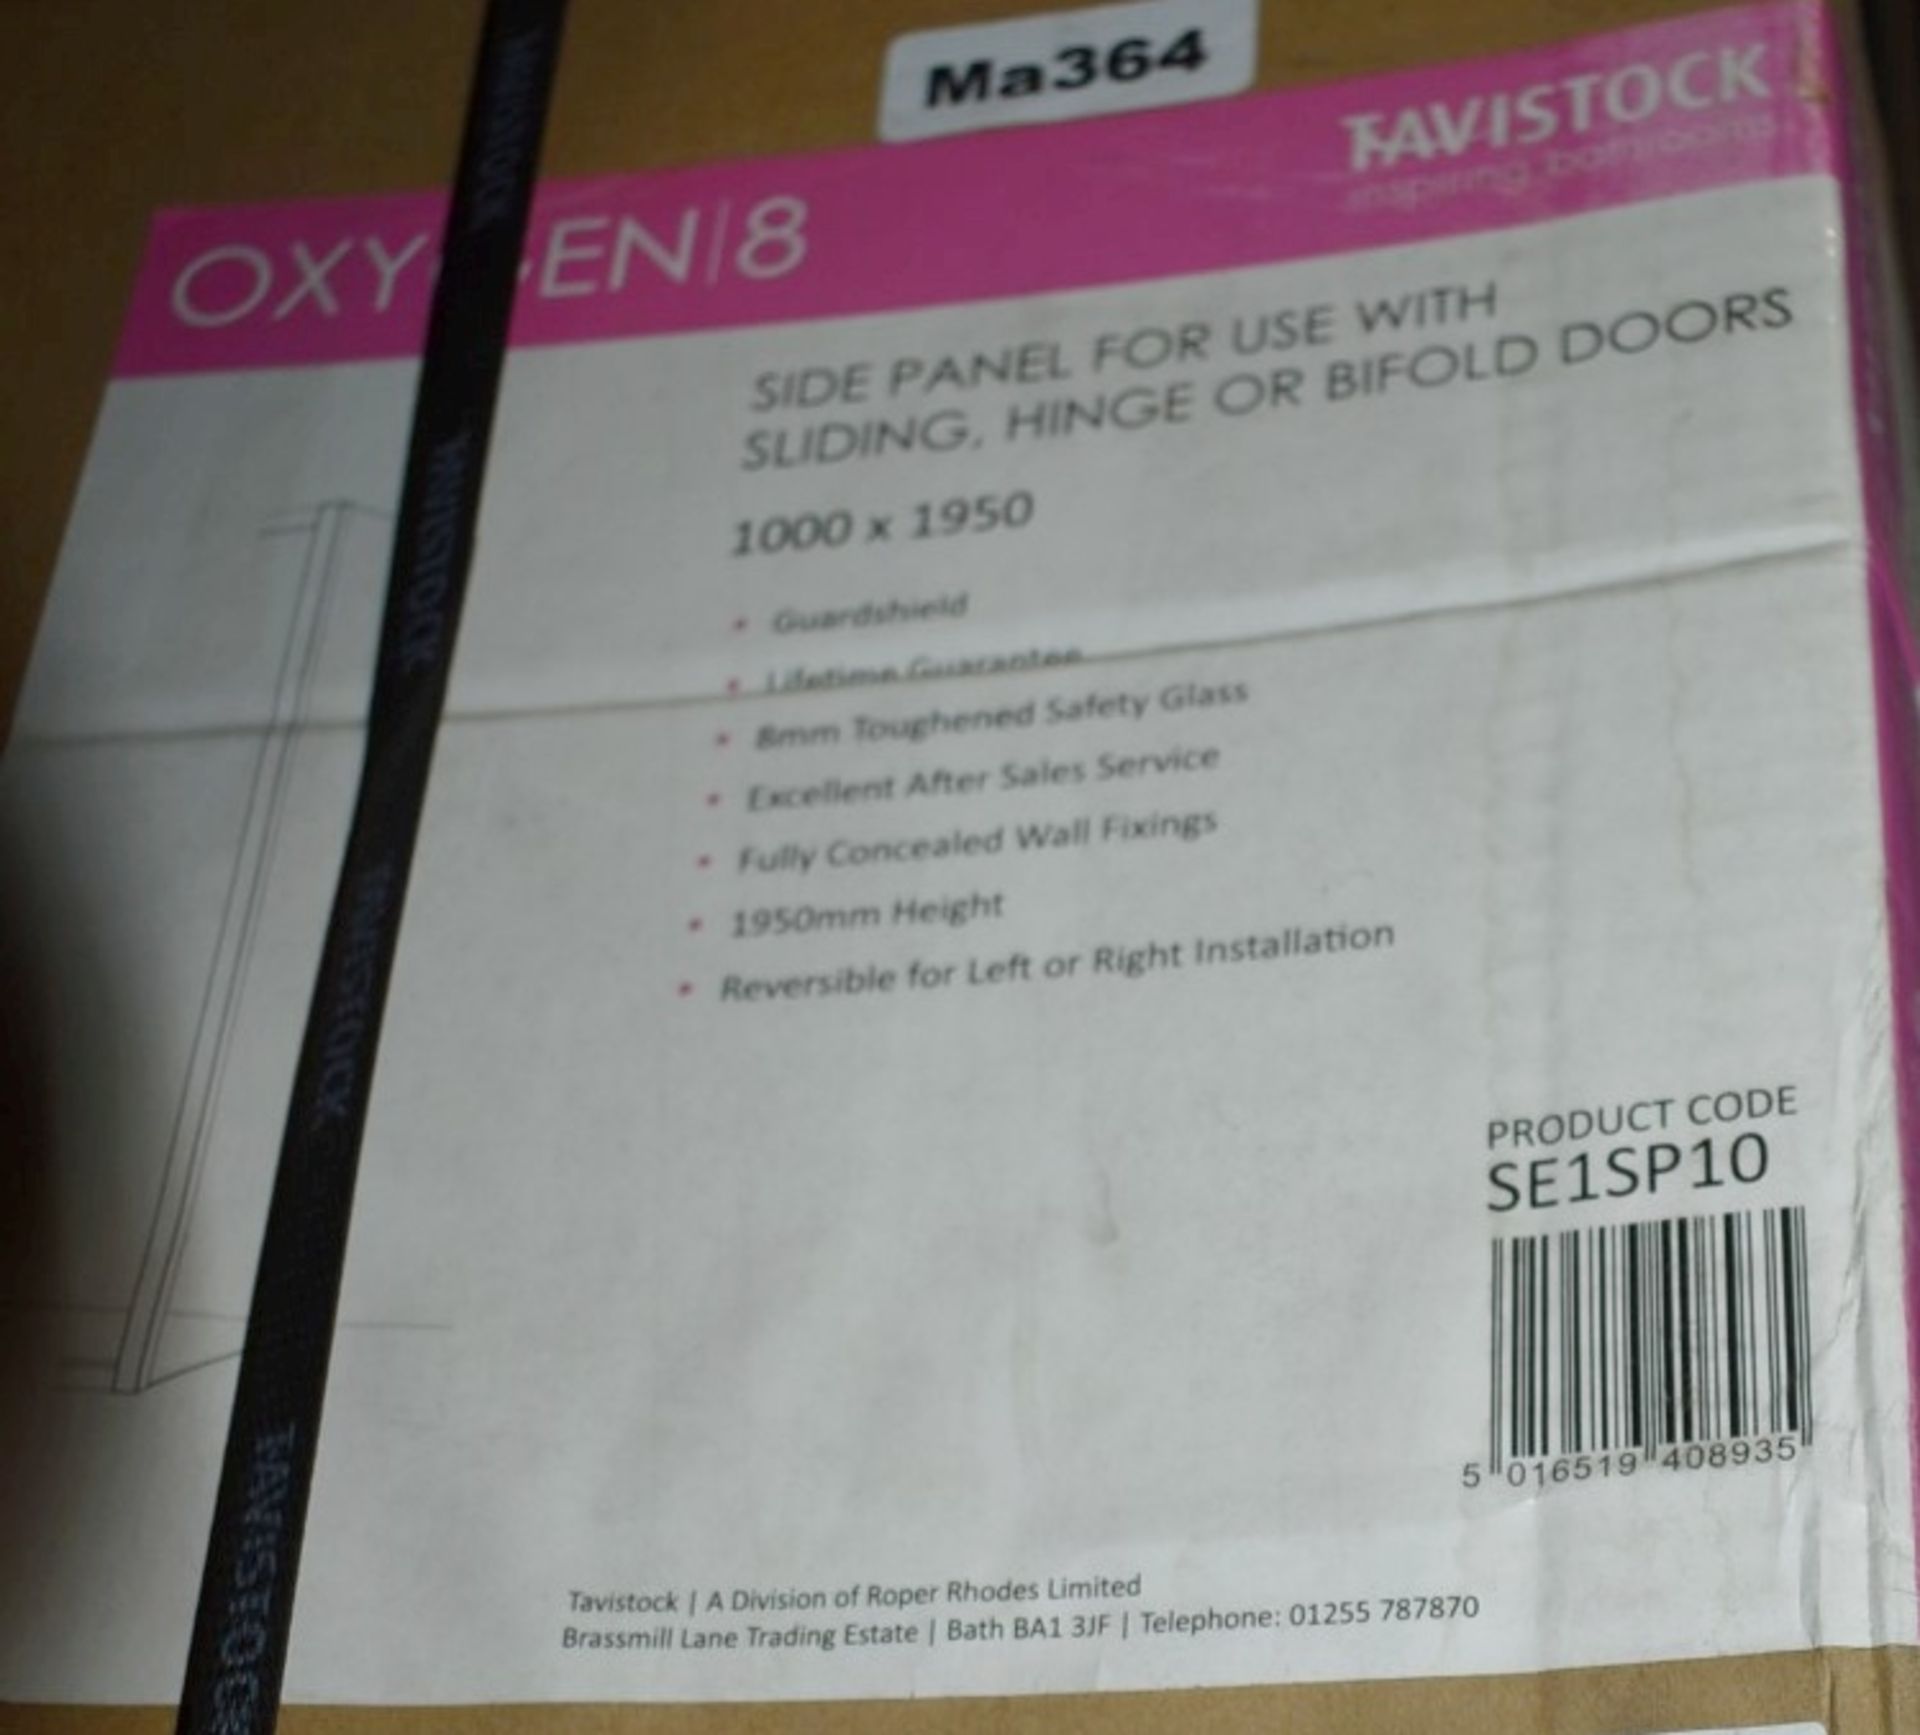 1 x Tavistock Oxygen 8 Side Panel For Use With Sliding, Hinged or Bifold Tavistock Oxygen 8 Shower